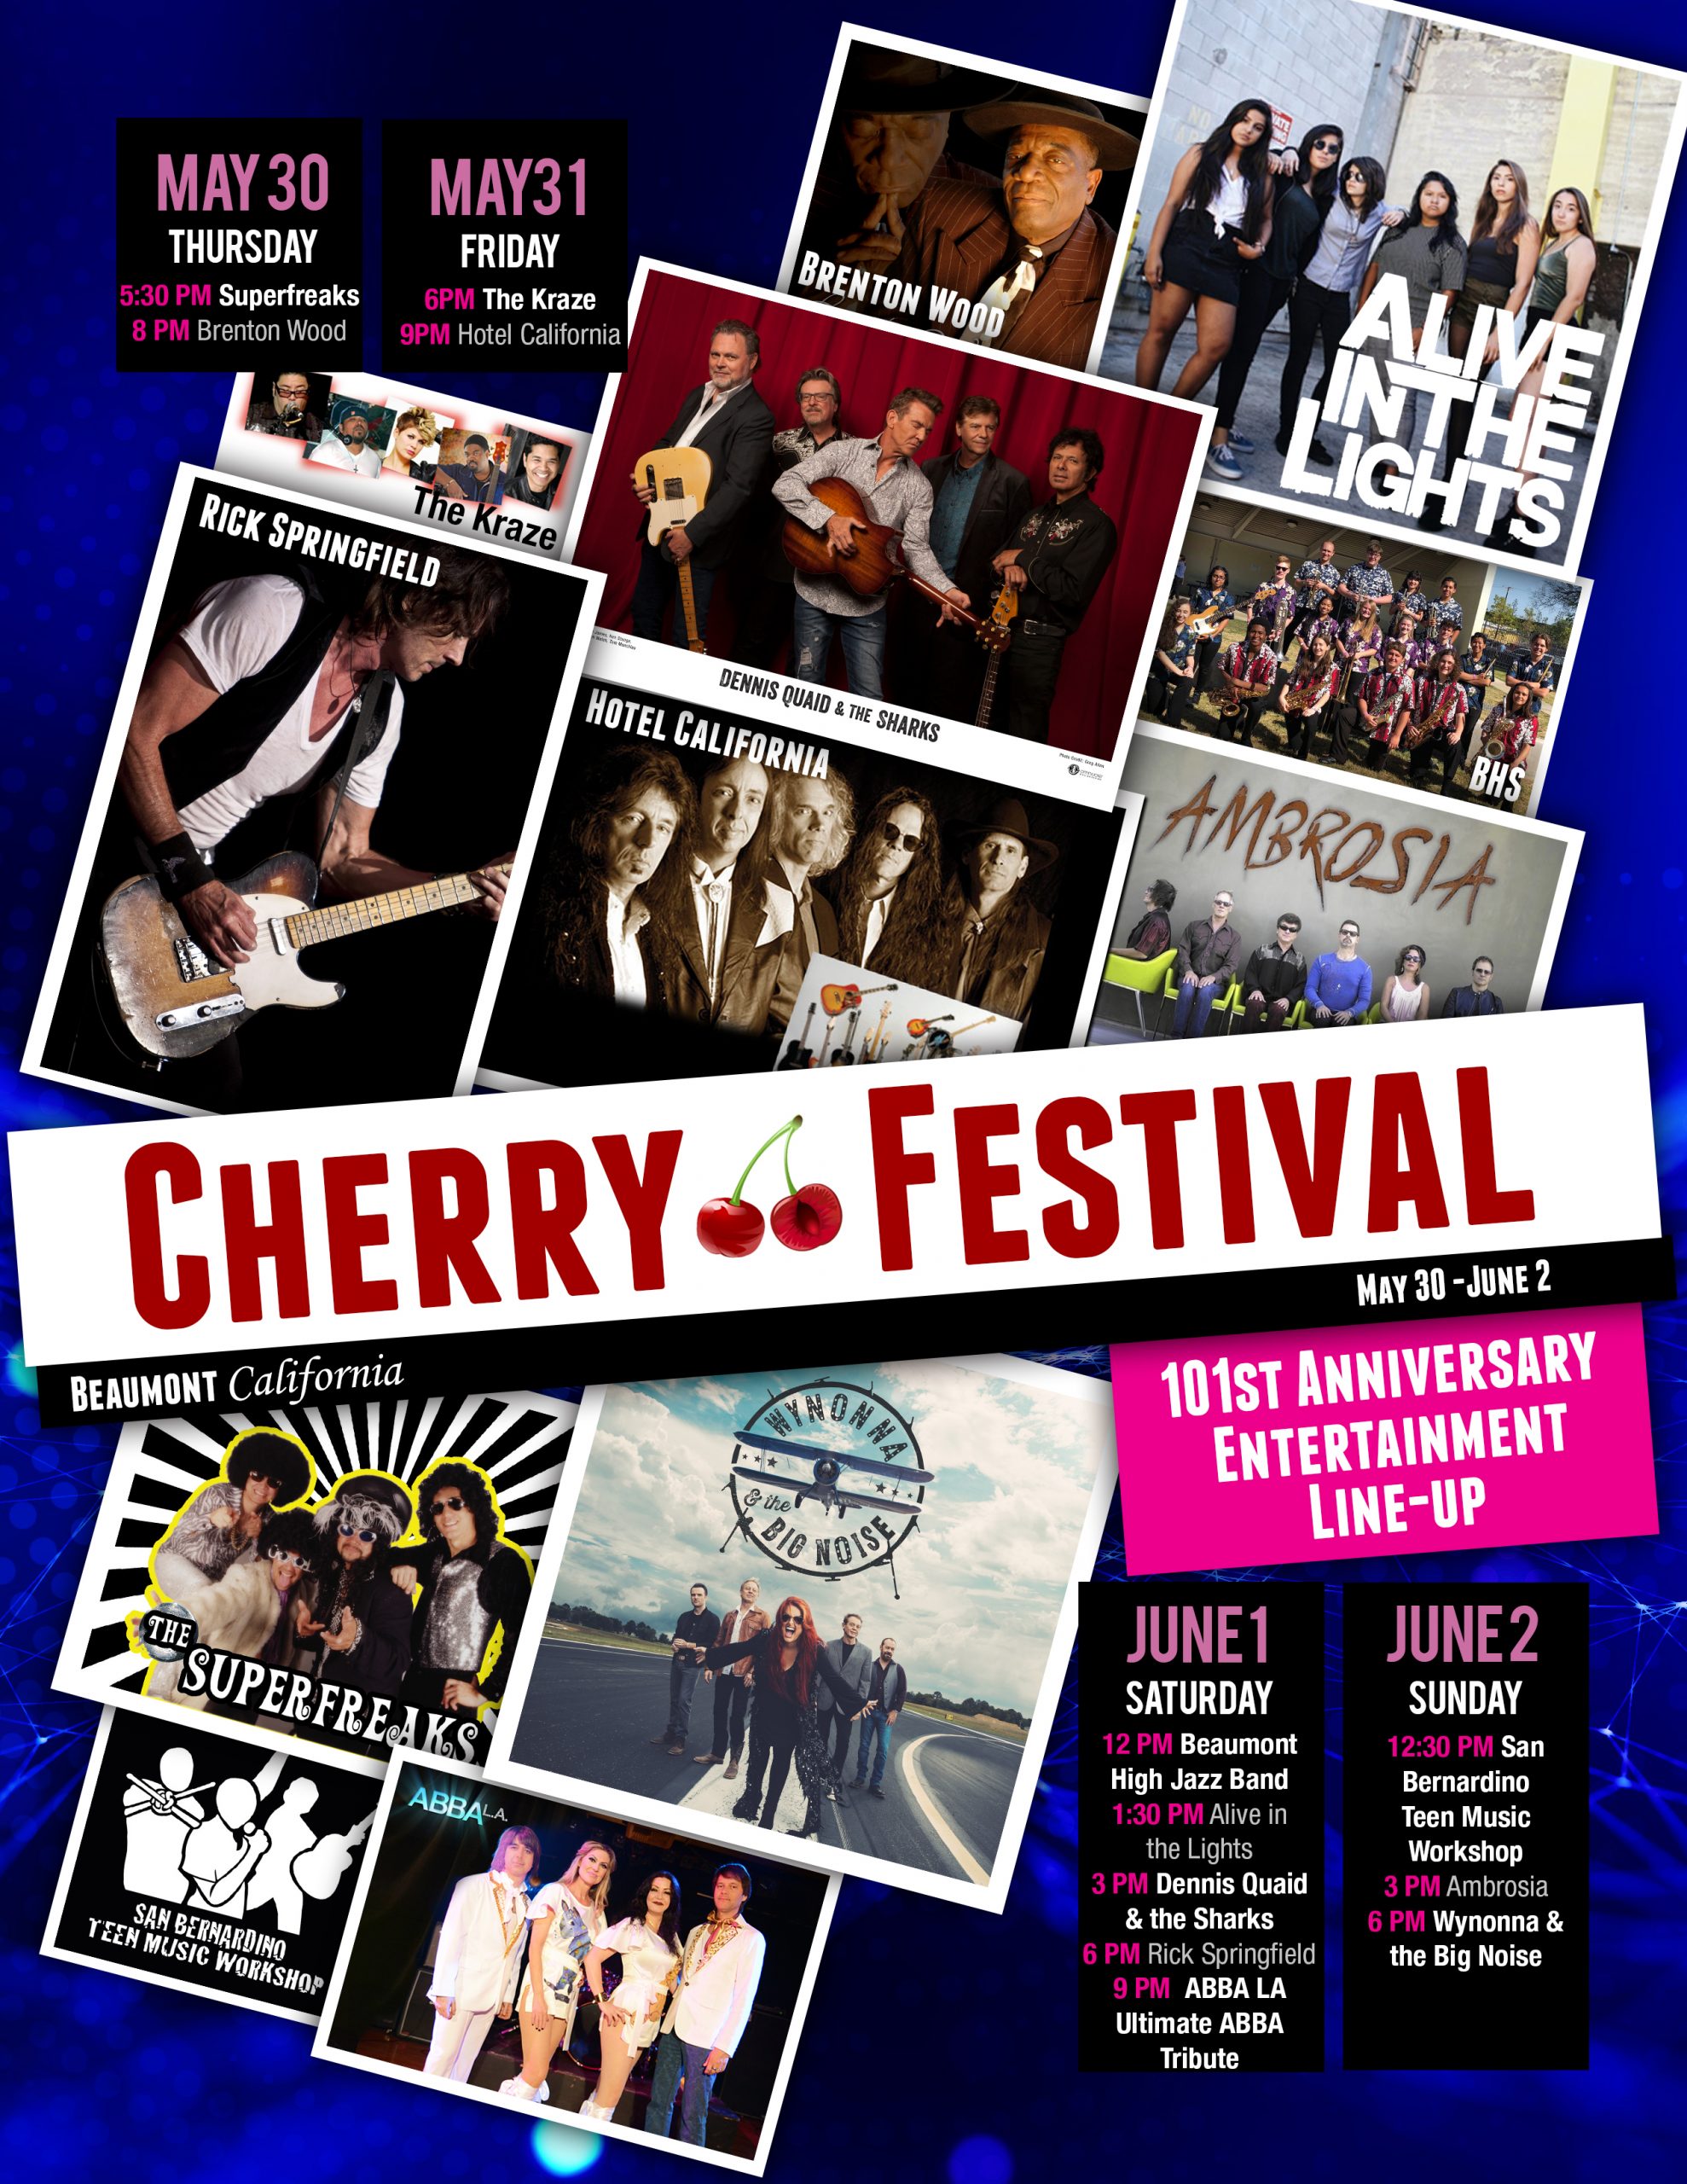 2019 Cherry Festival